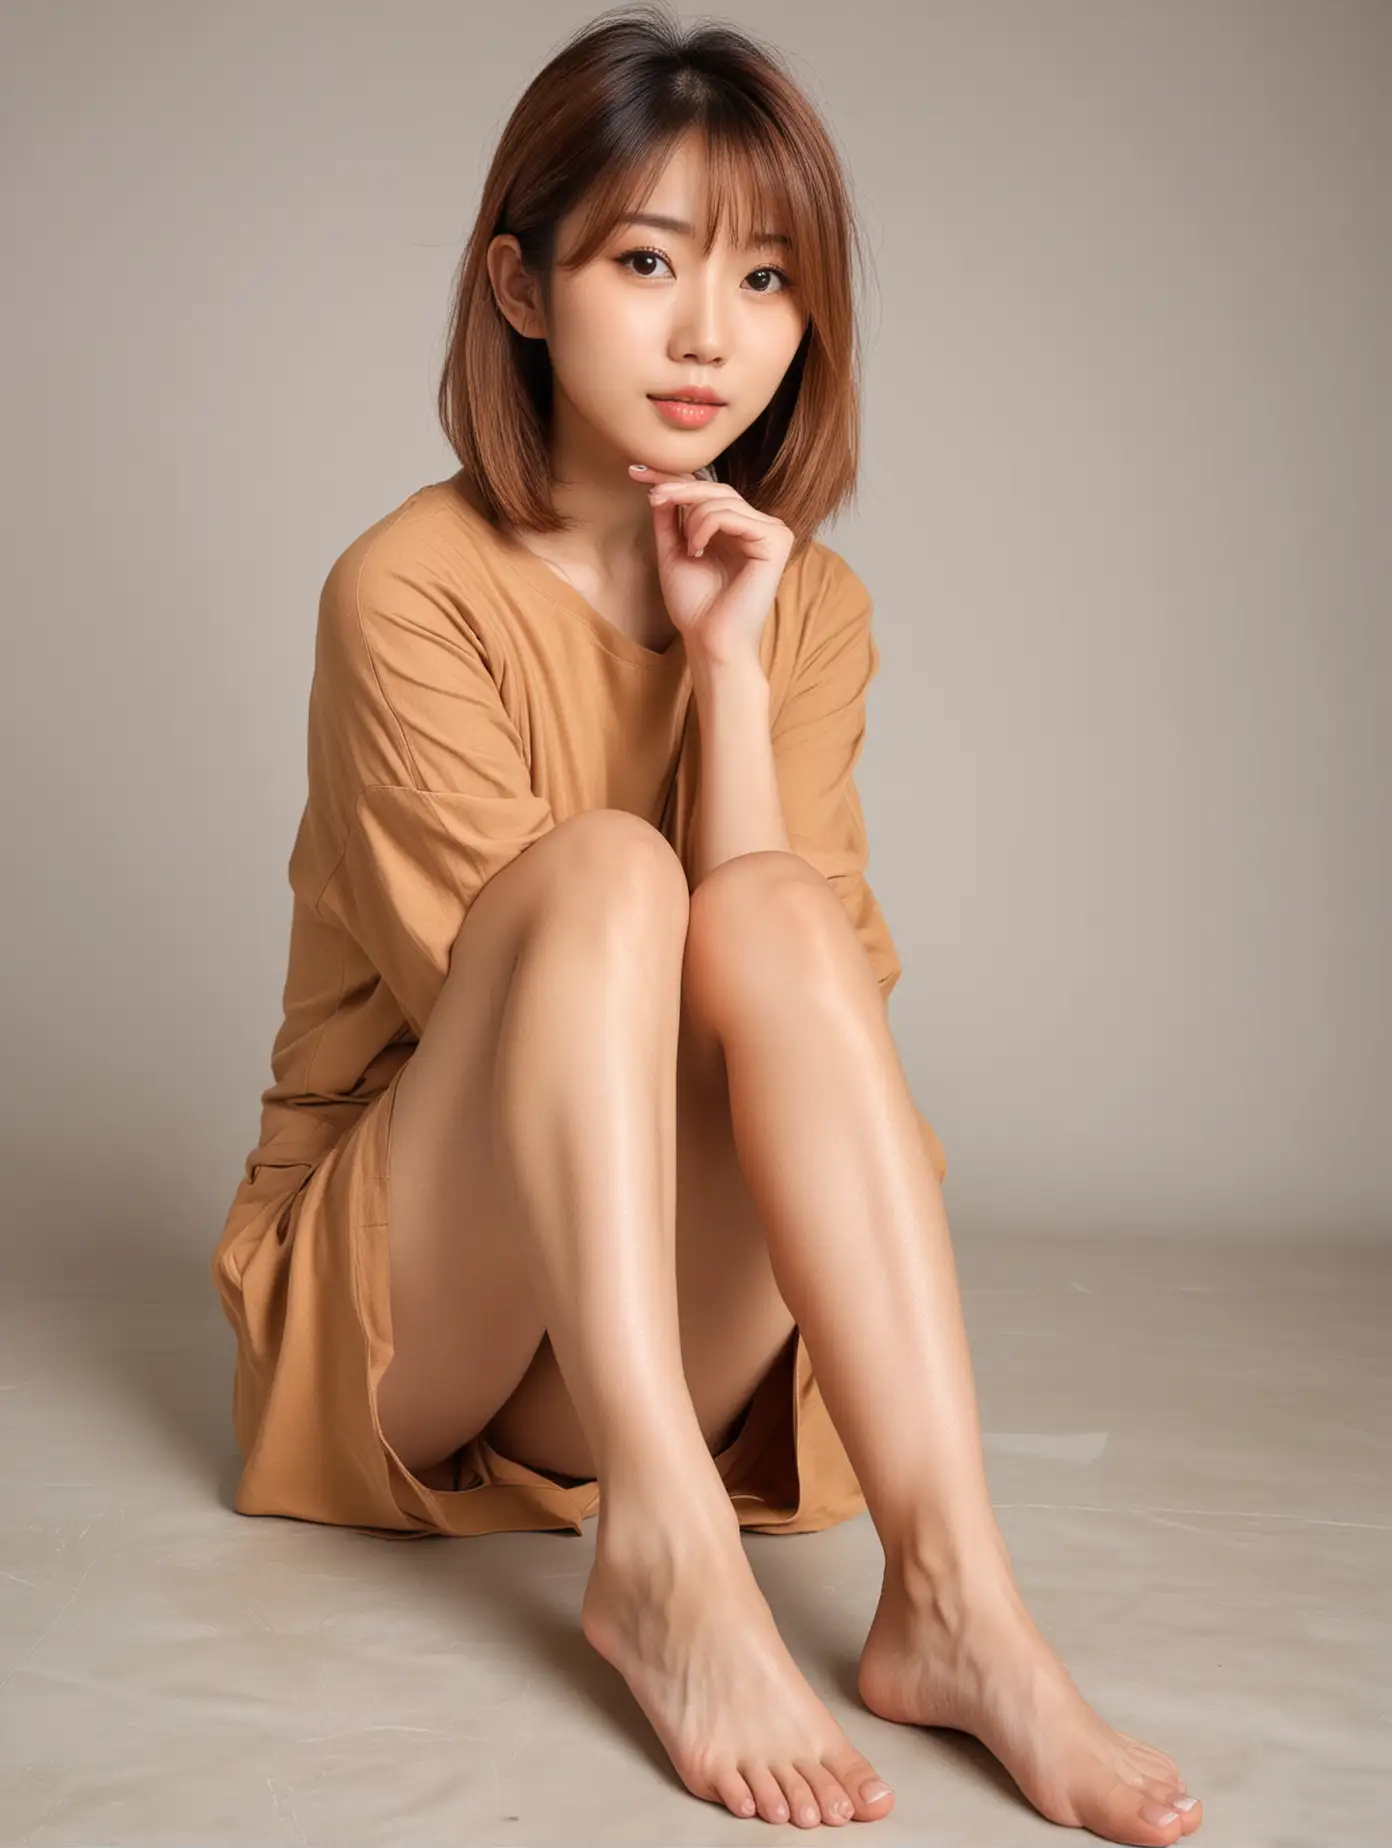 Japanese girl with caramel-colored medium length hair, posing showing her feet